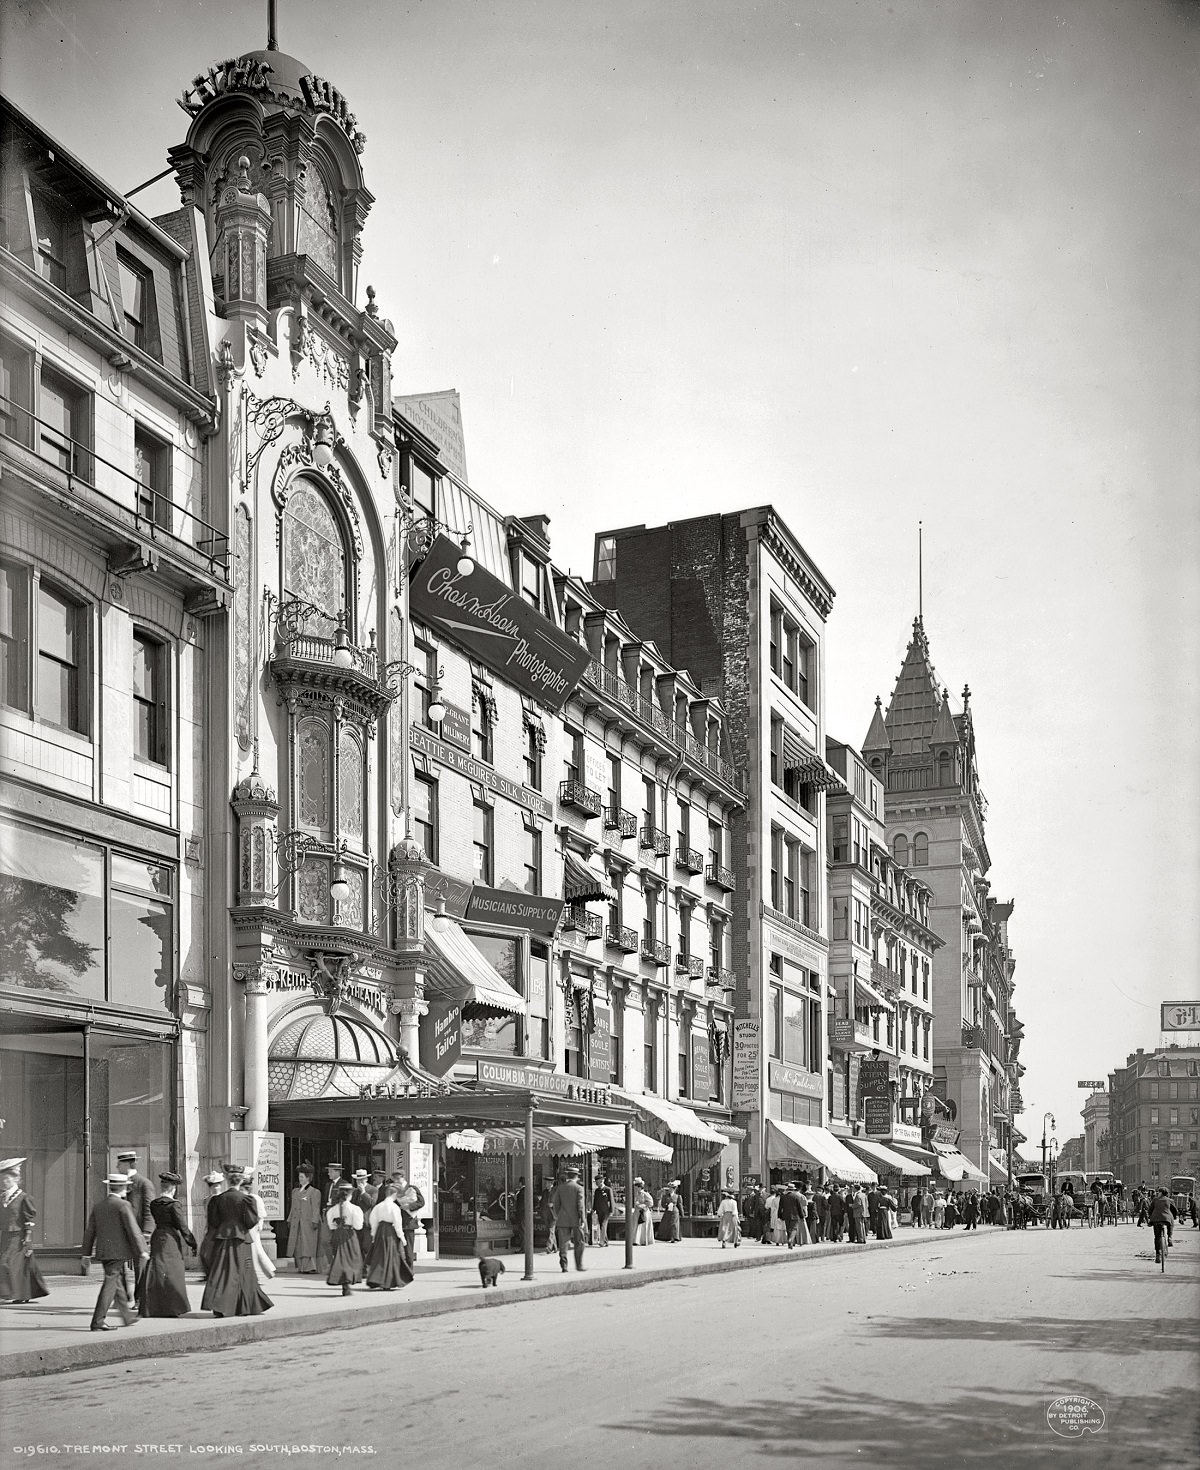 Tremont Street building, Boston, Massachusetts, circa 1906.